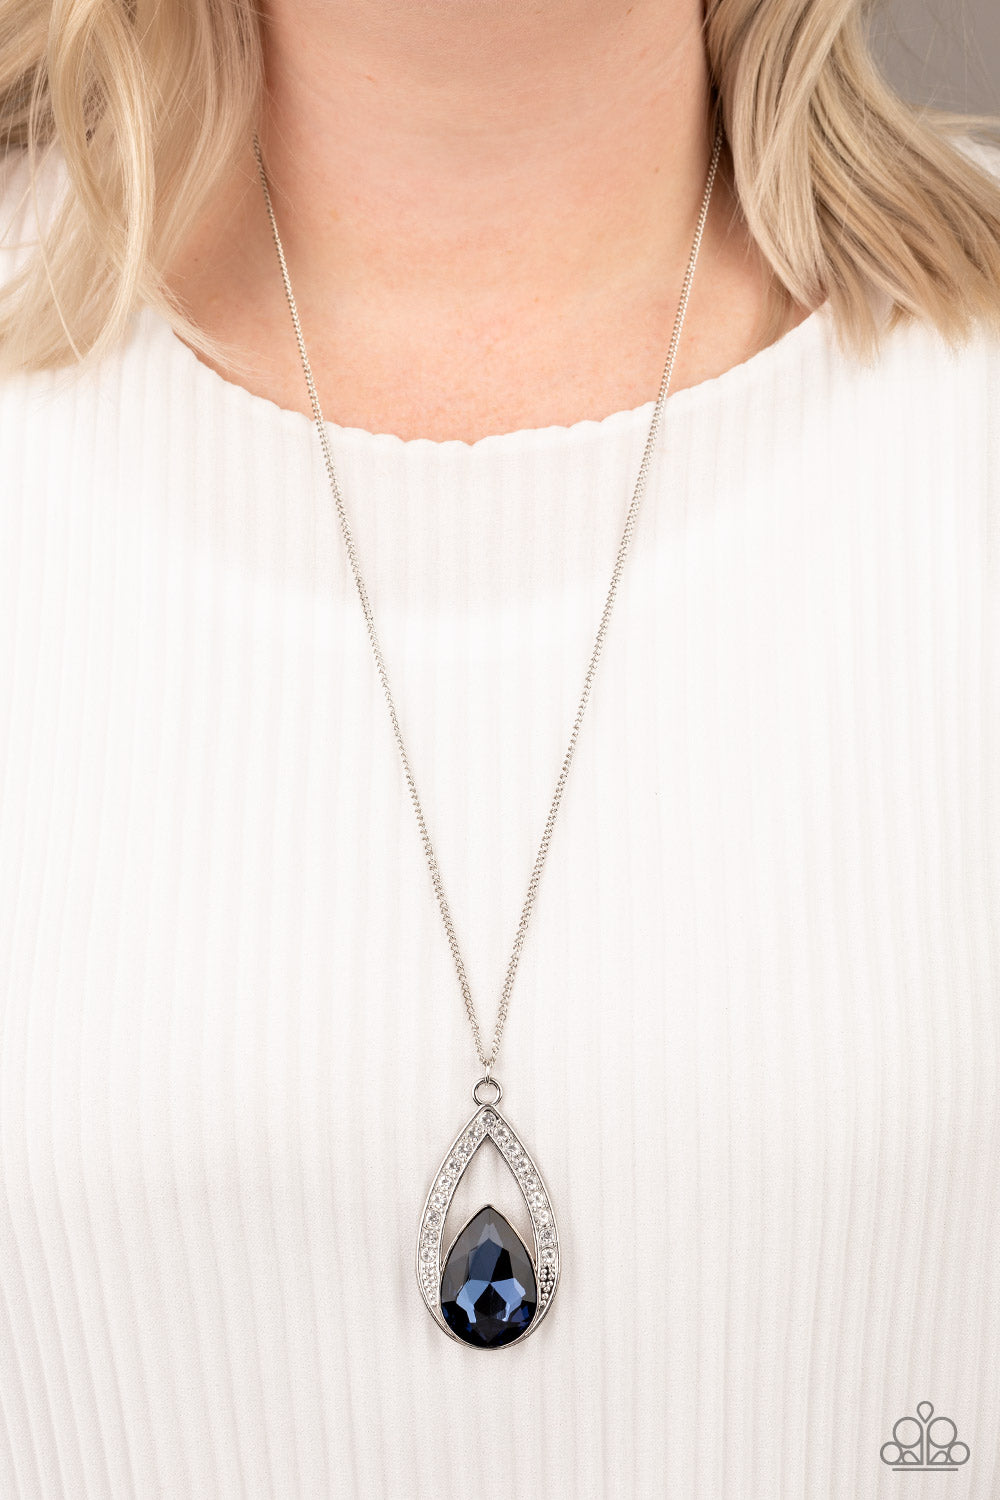 Notorious Noble Blue Necklace Paparazzi Accessories. #P2RE-BLXX-213XX. $5 Jewelry